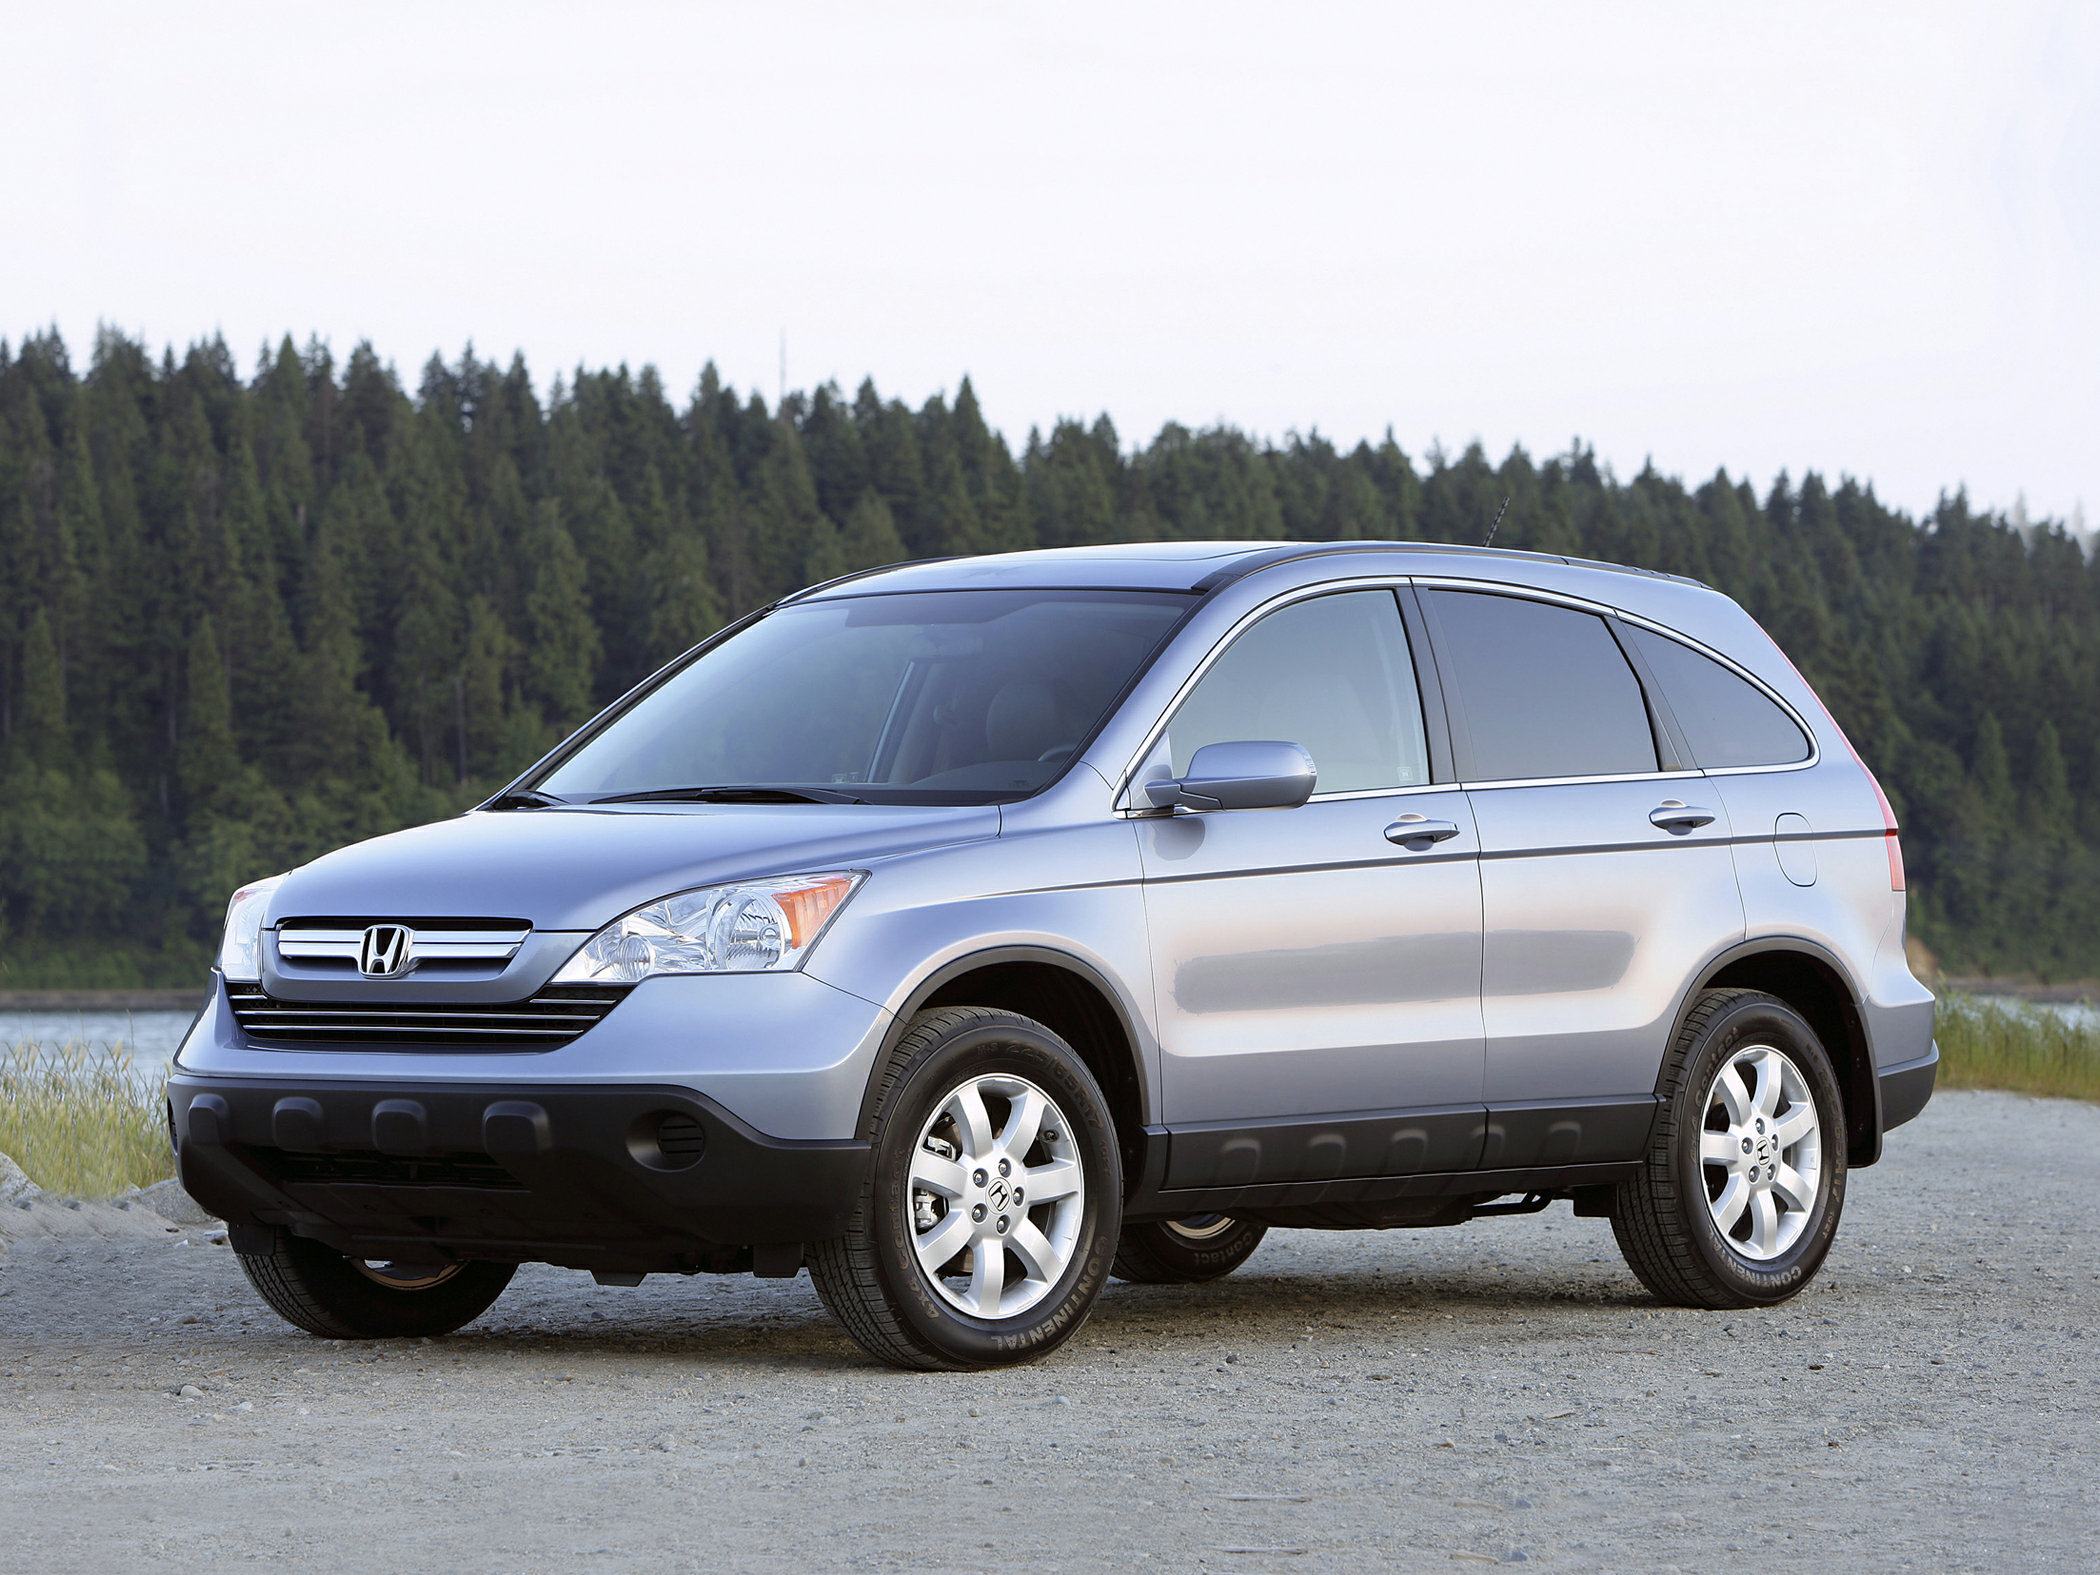 Honda CR-V 2007-2013 Price, Images, Mileage, Reviews, Specs